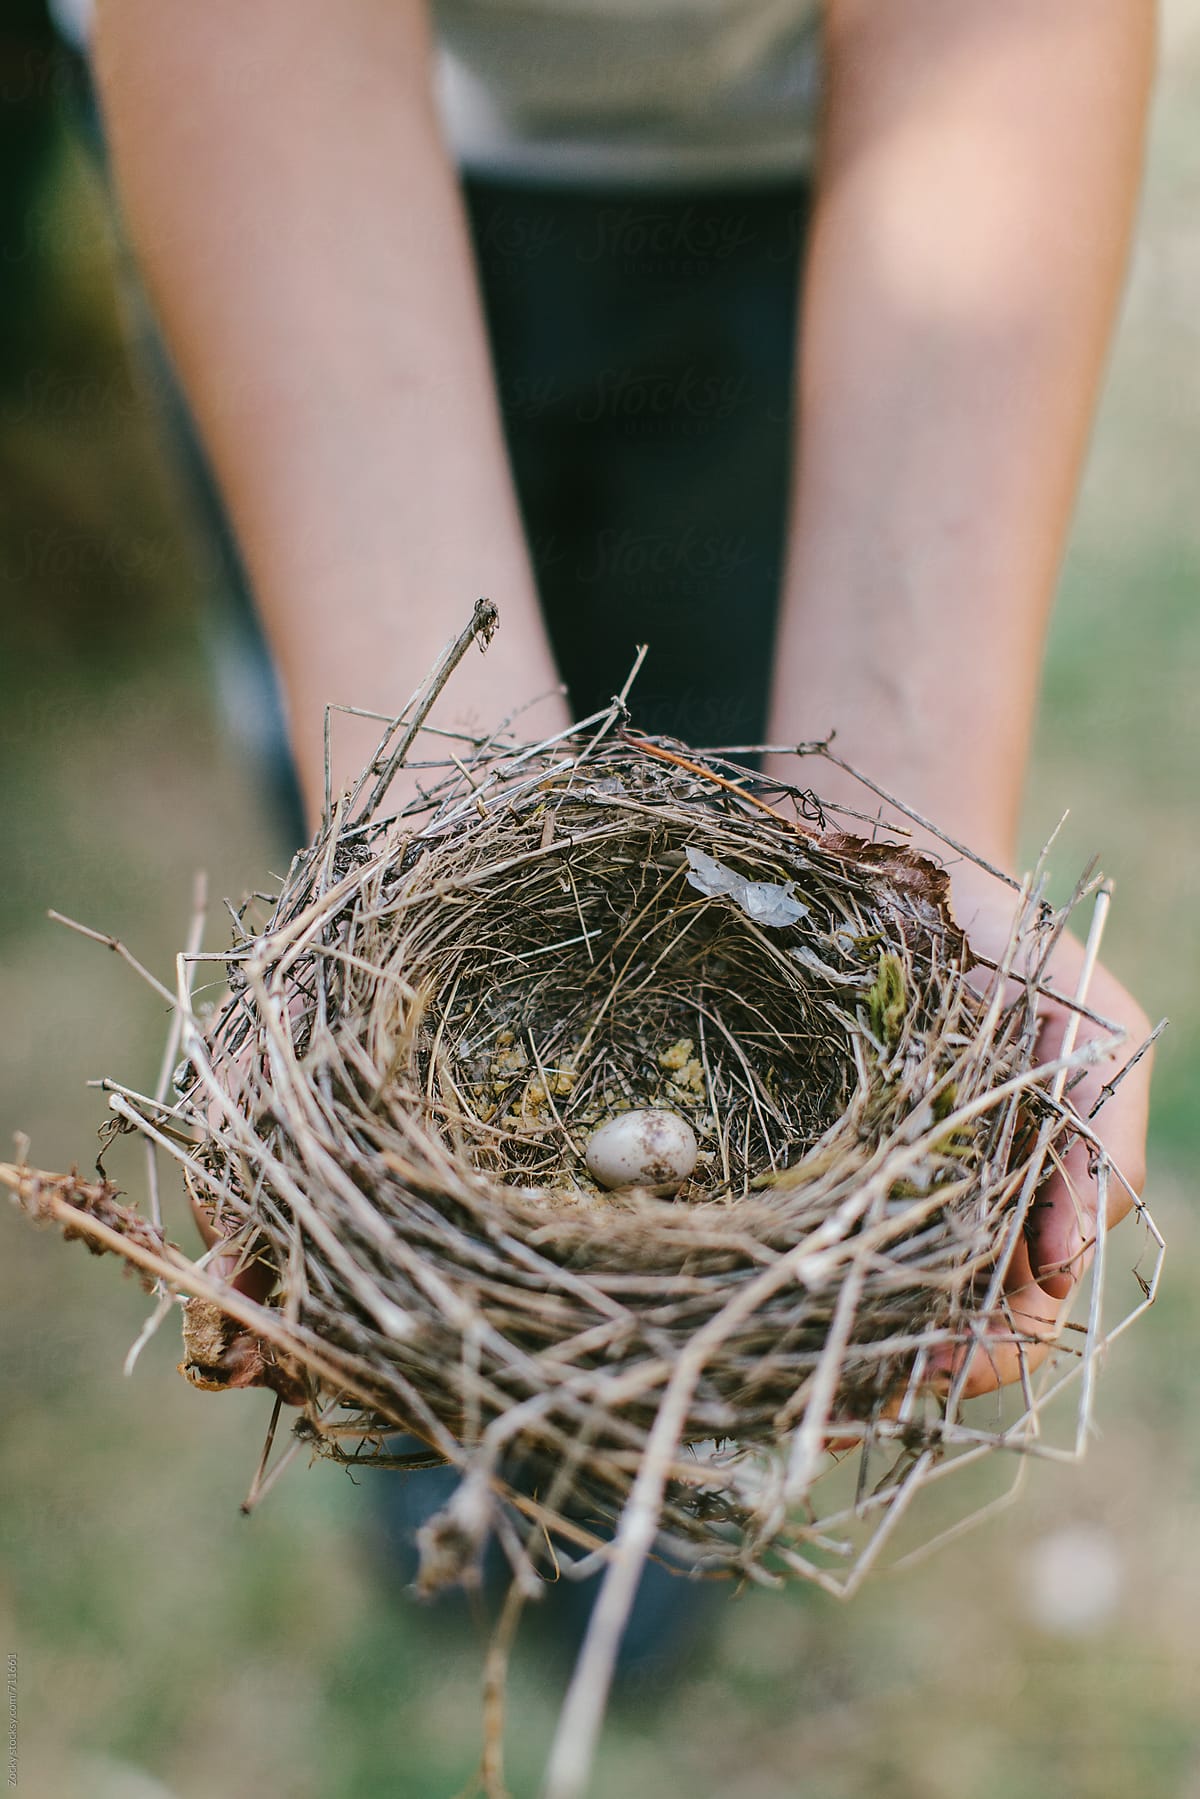 Boy hands holding a small bird\'s nest with egg inside